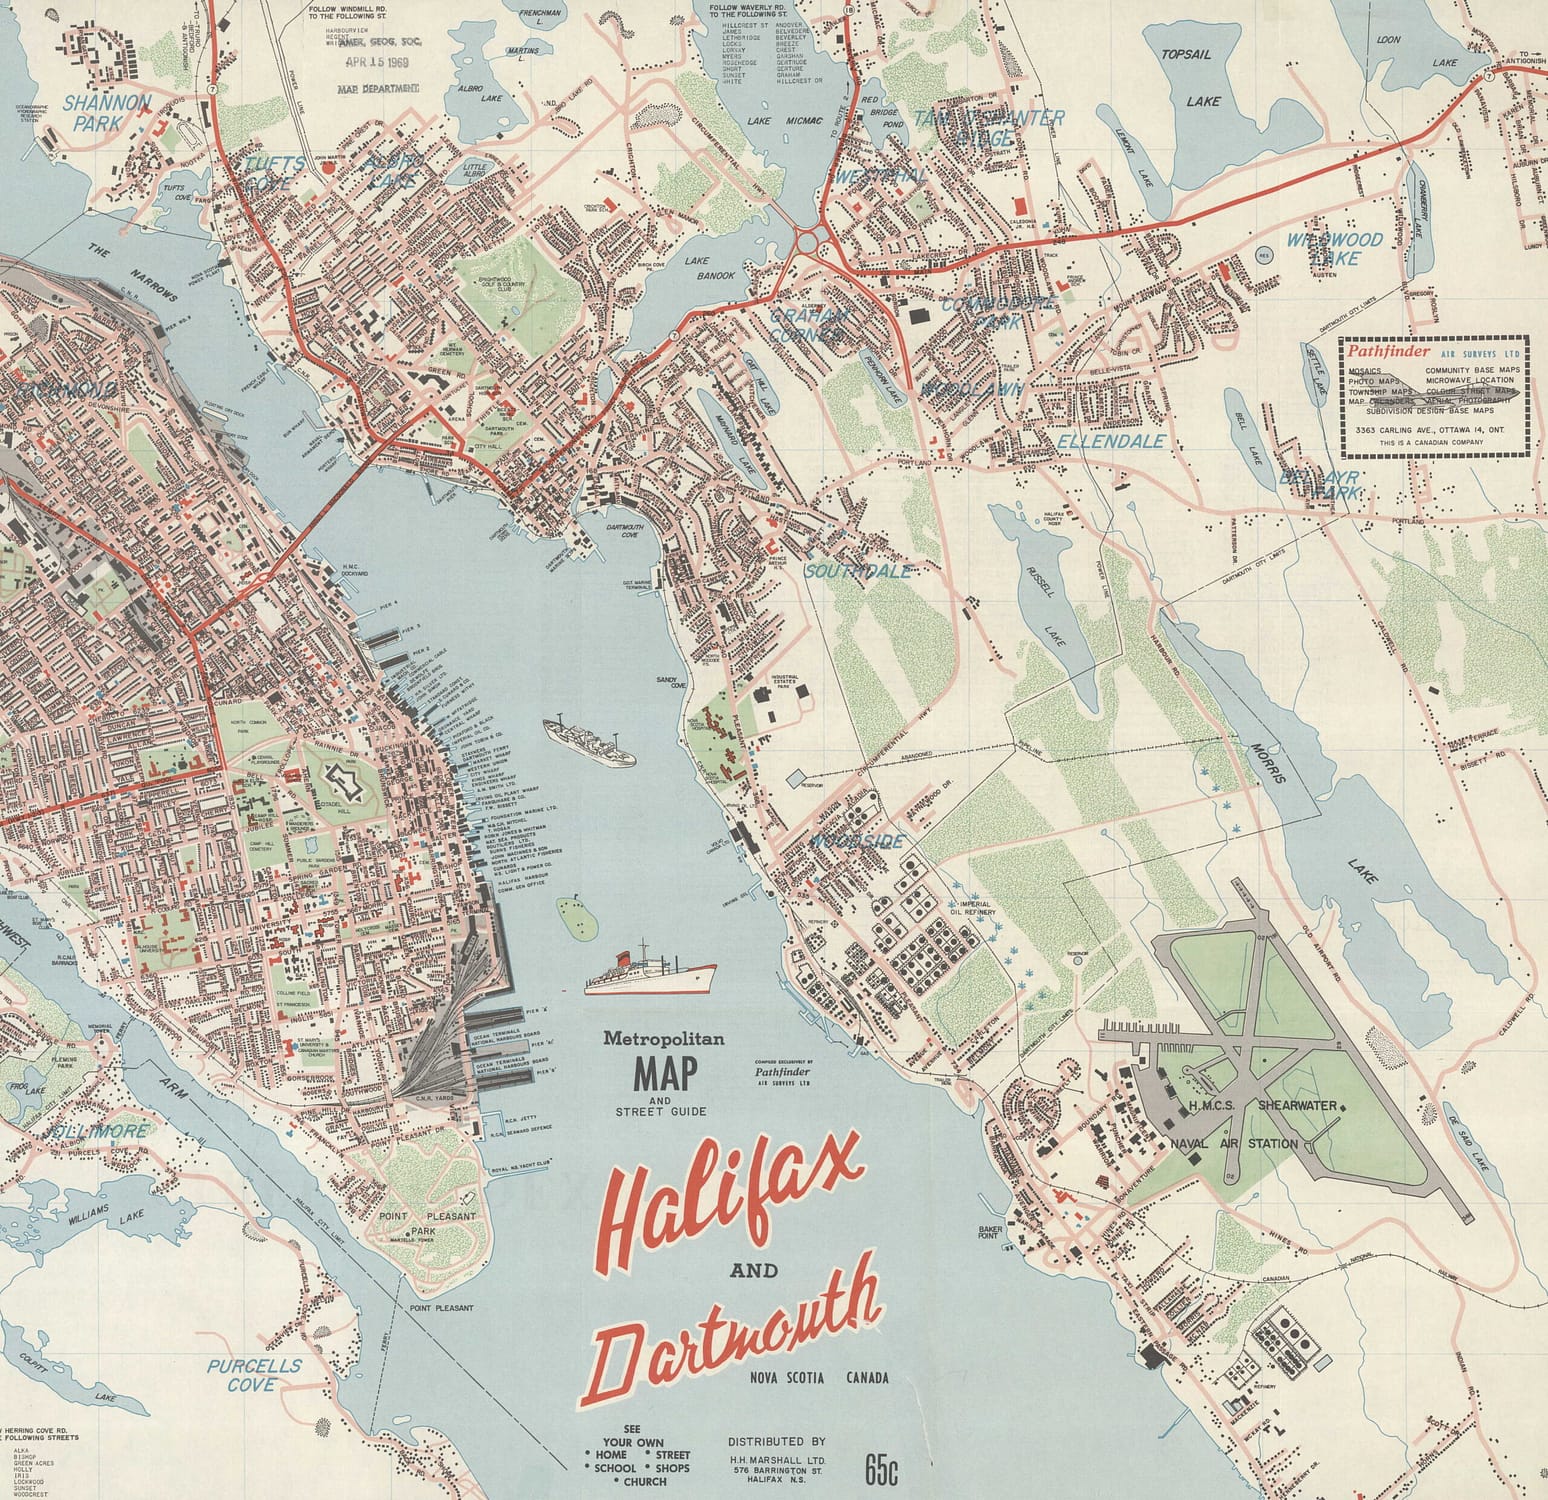 Metropolitan map and street guide Halifax and Dartmouth, Nova Scotia